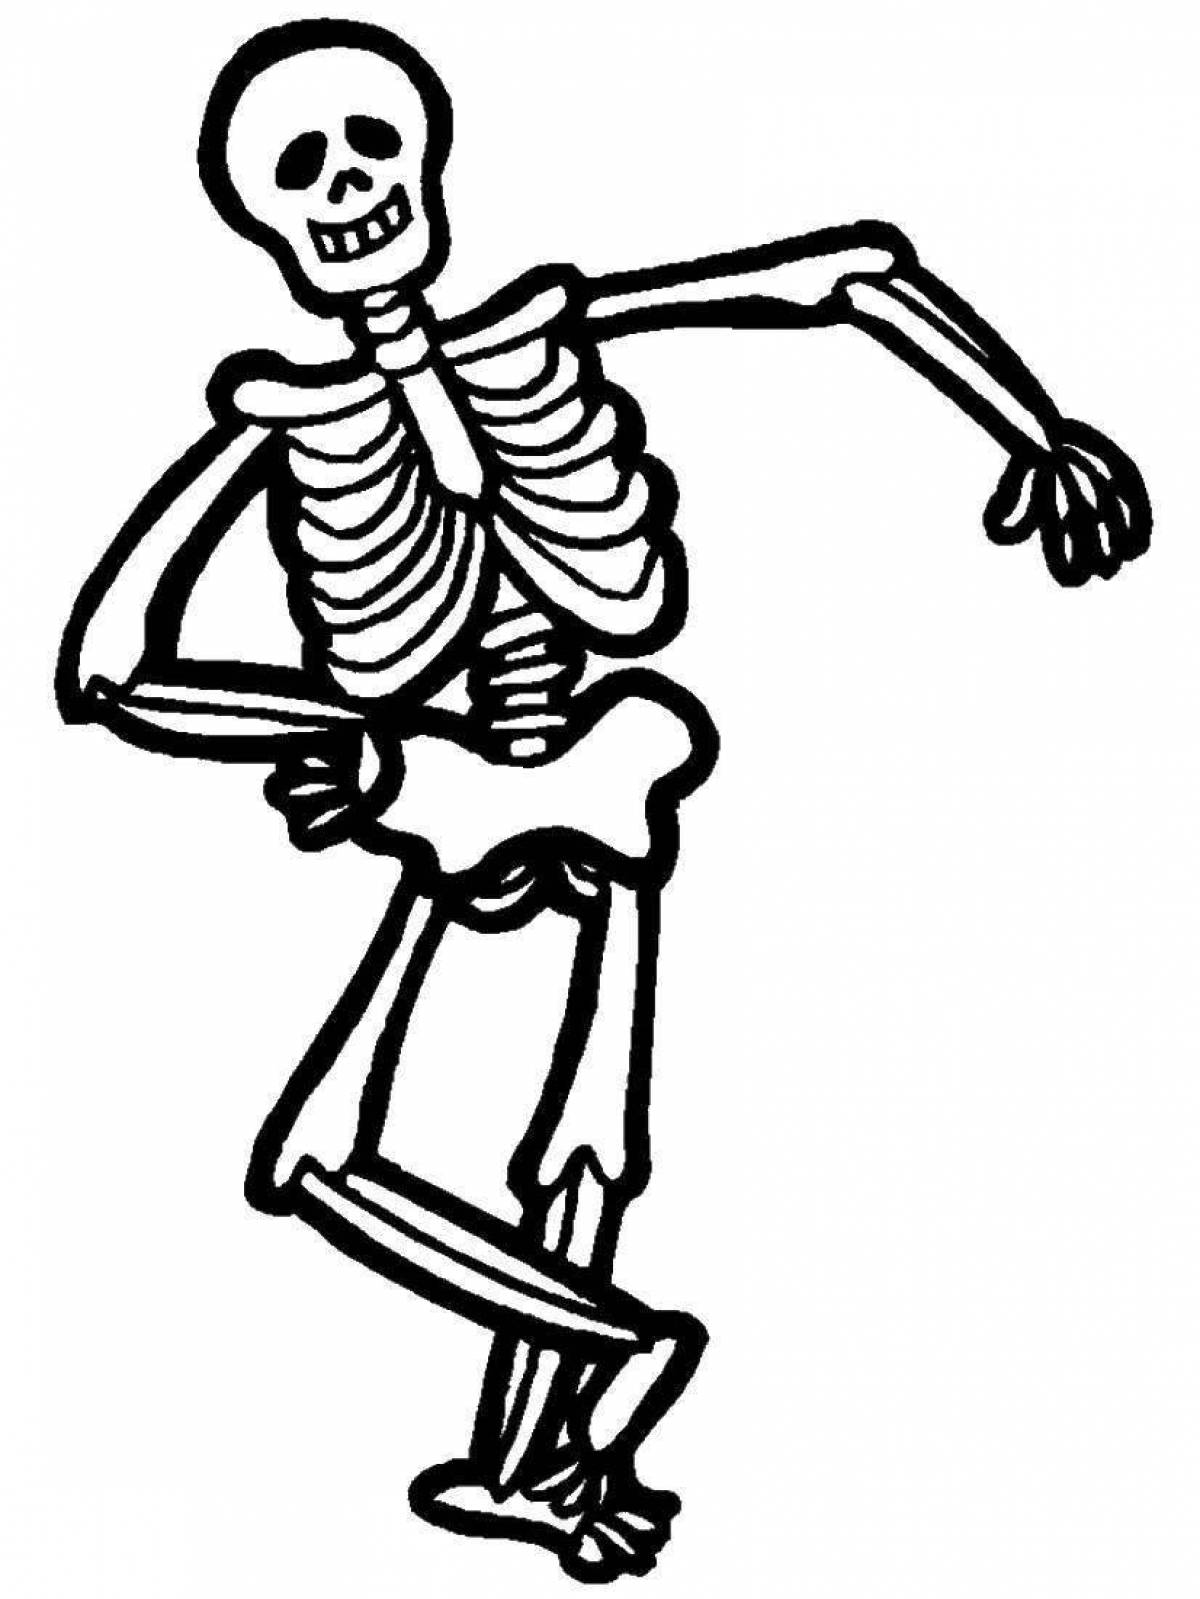 Adorable human skeleton coloring page